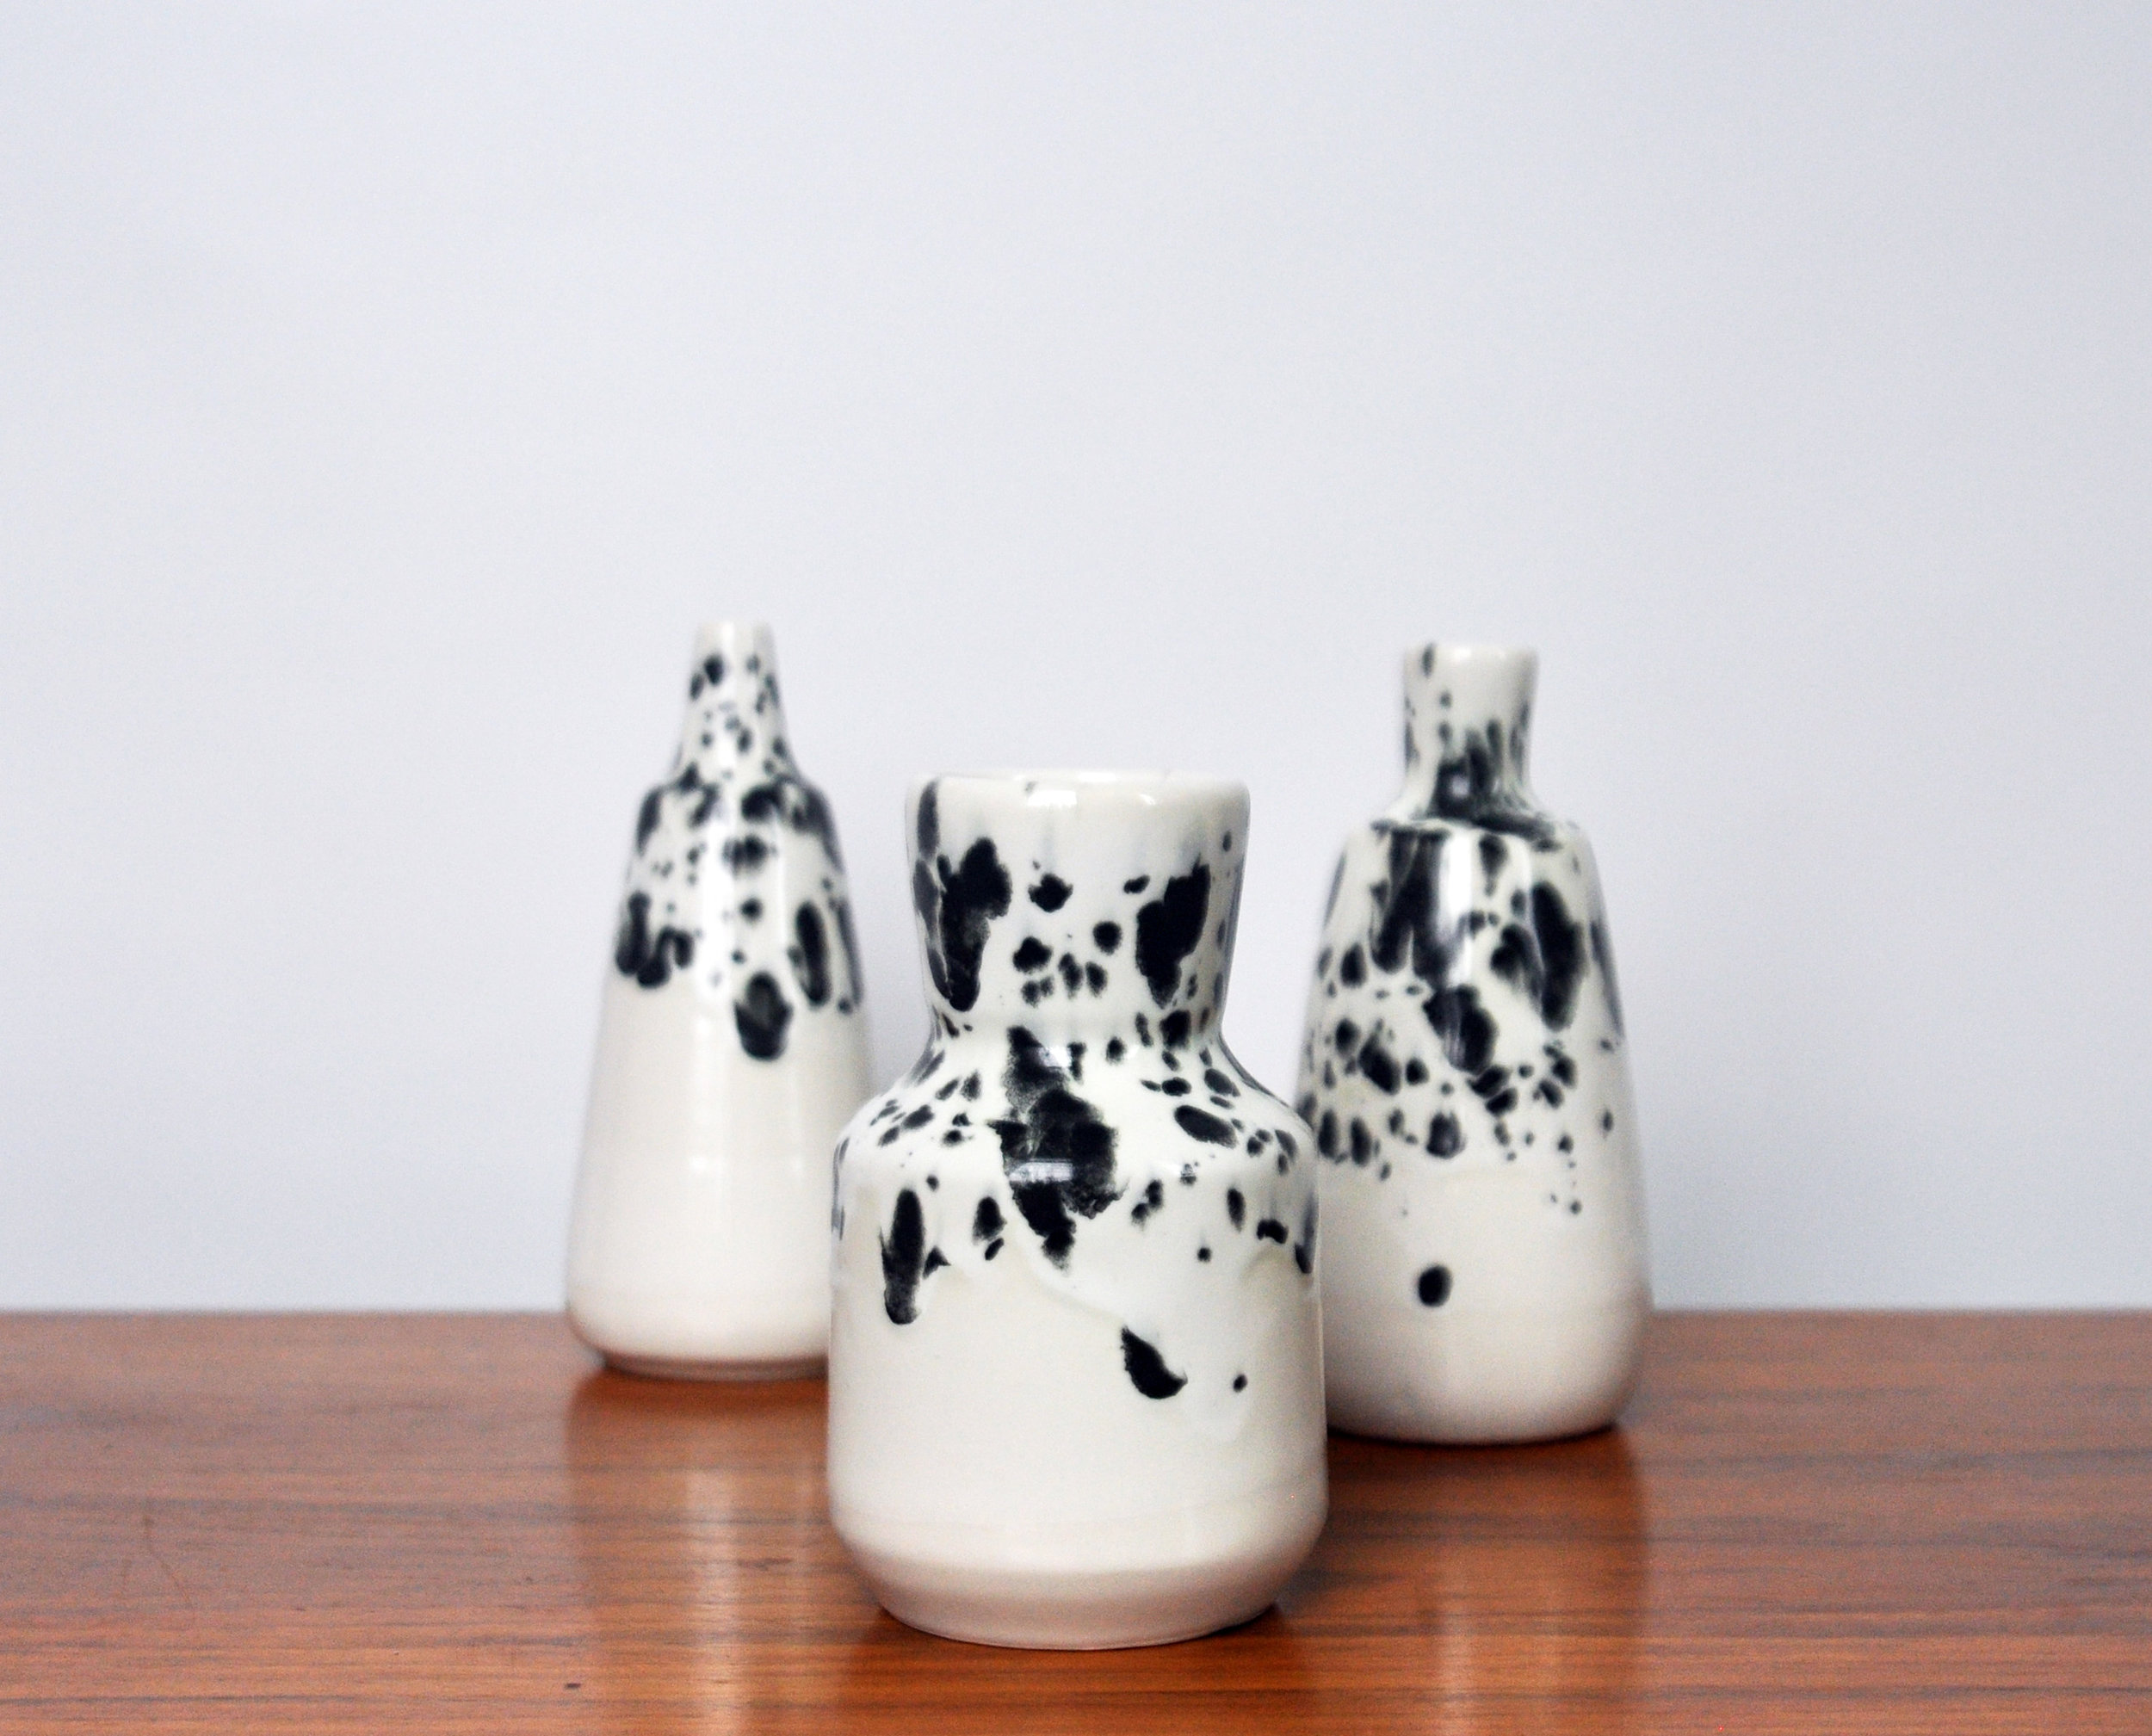 vases w black spots.jpg